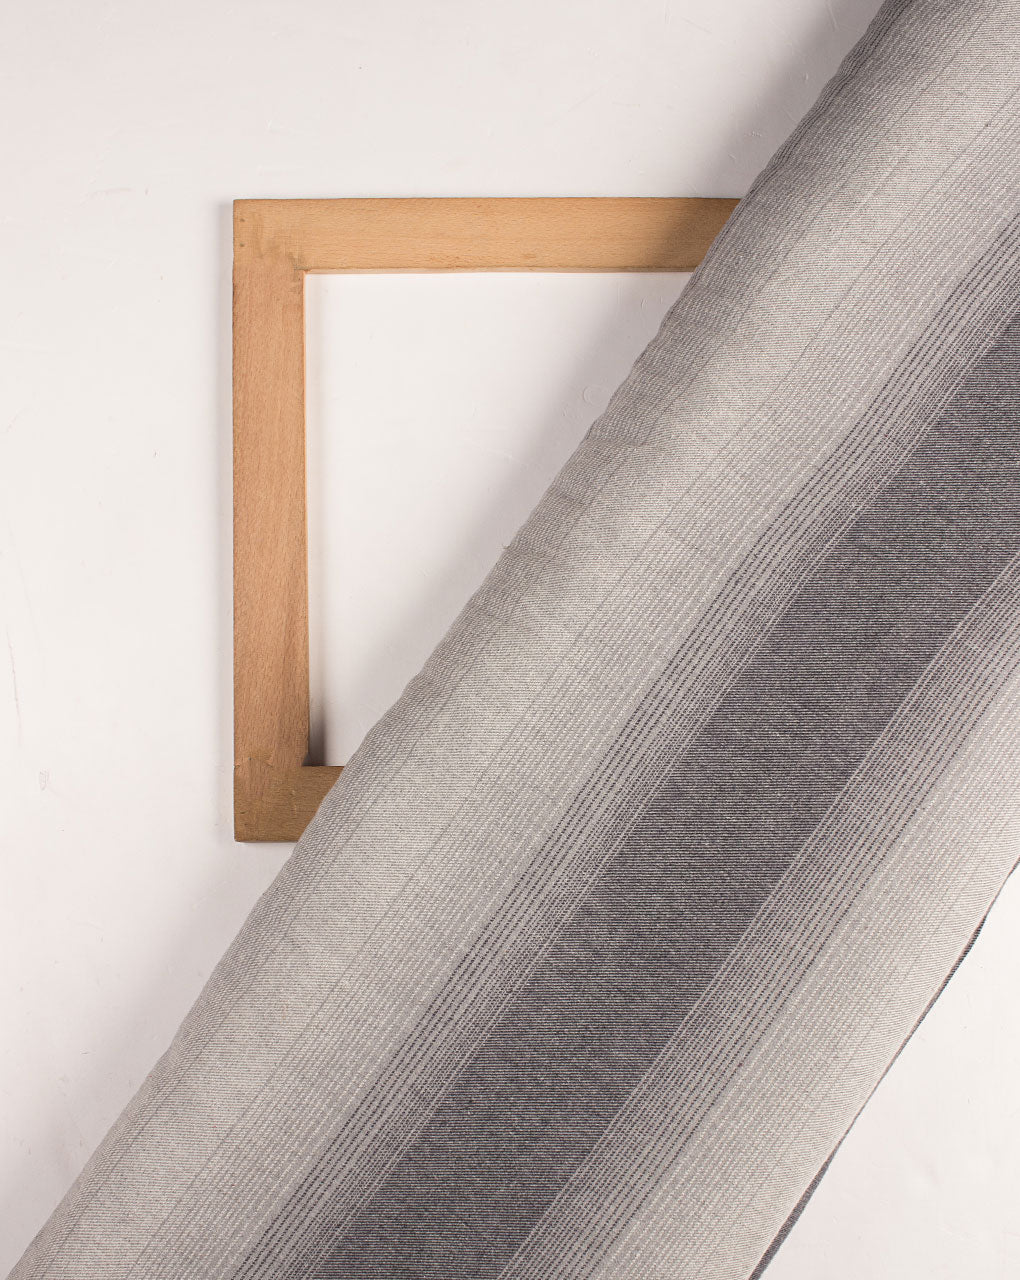 Cotton Flannel Fabric ( Width 58 Inch ) - Fabriclore.com